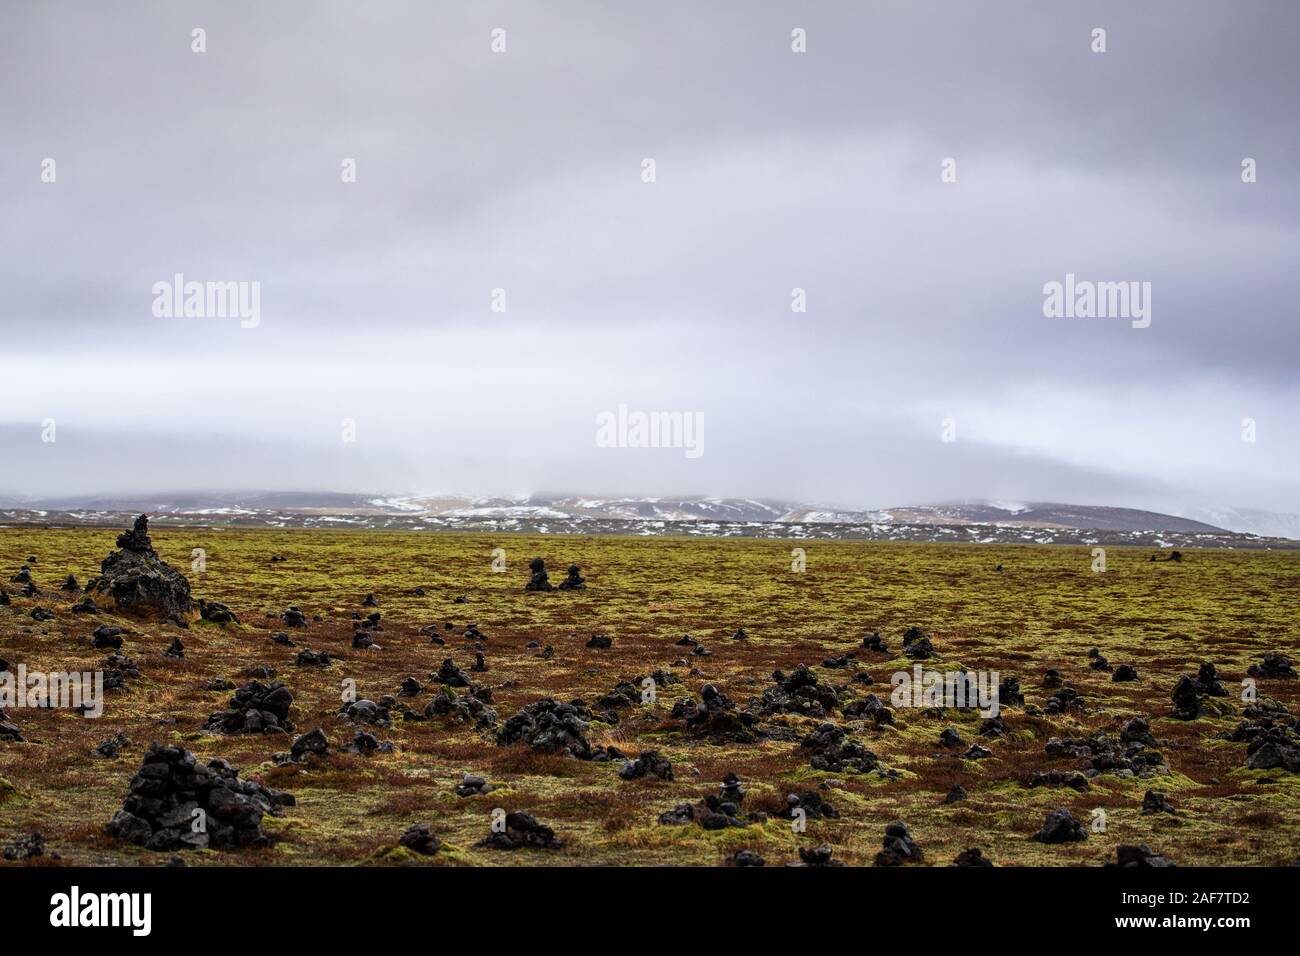 Barren volcanic landscape of Iceland Stock Photo